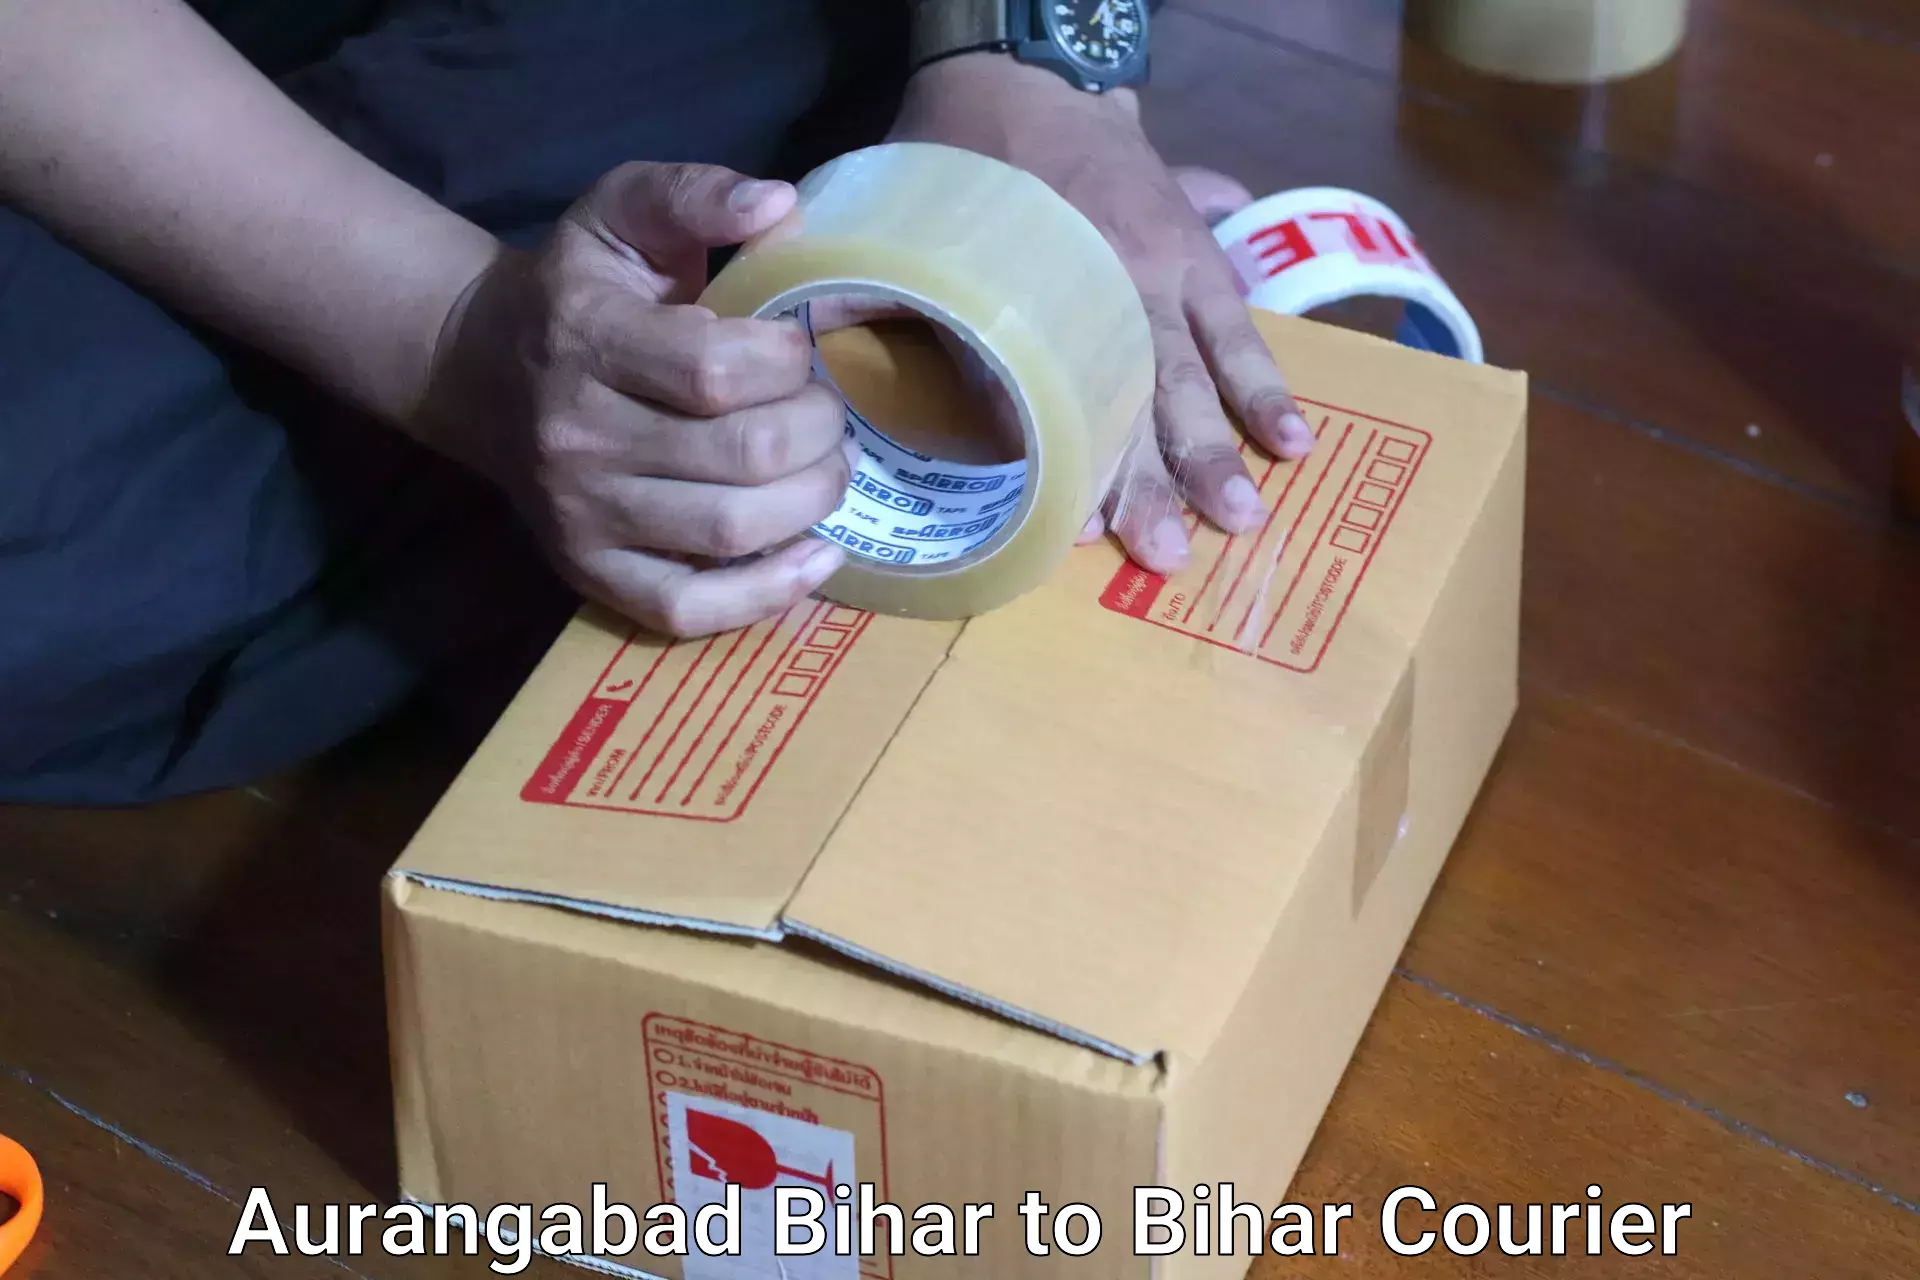 Luggage shipment tracking Aurangabad Bihar to Gaya